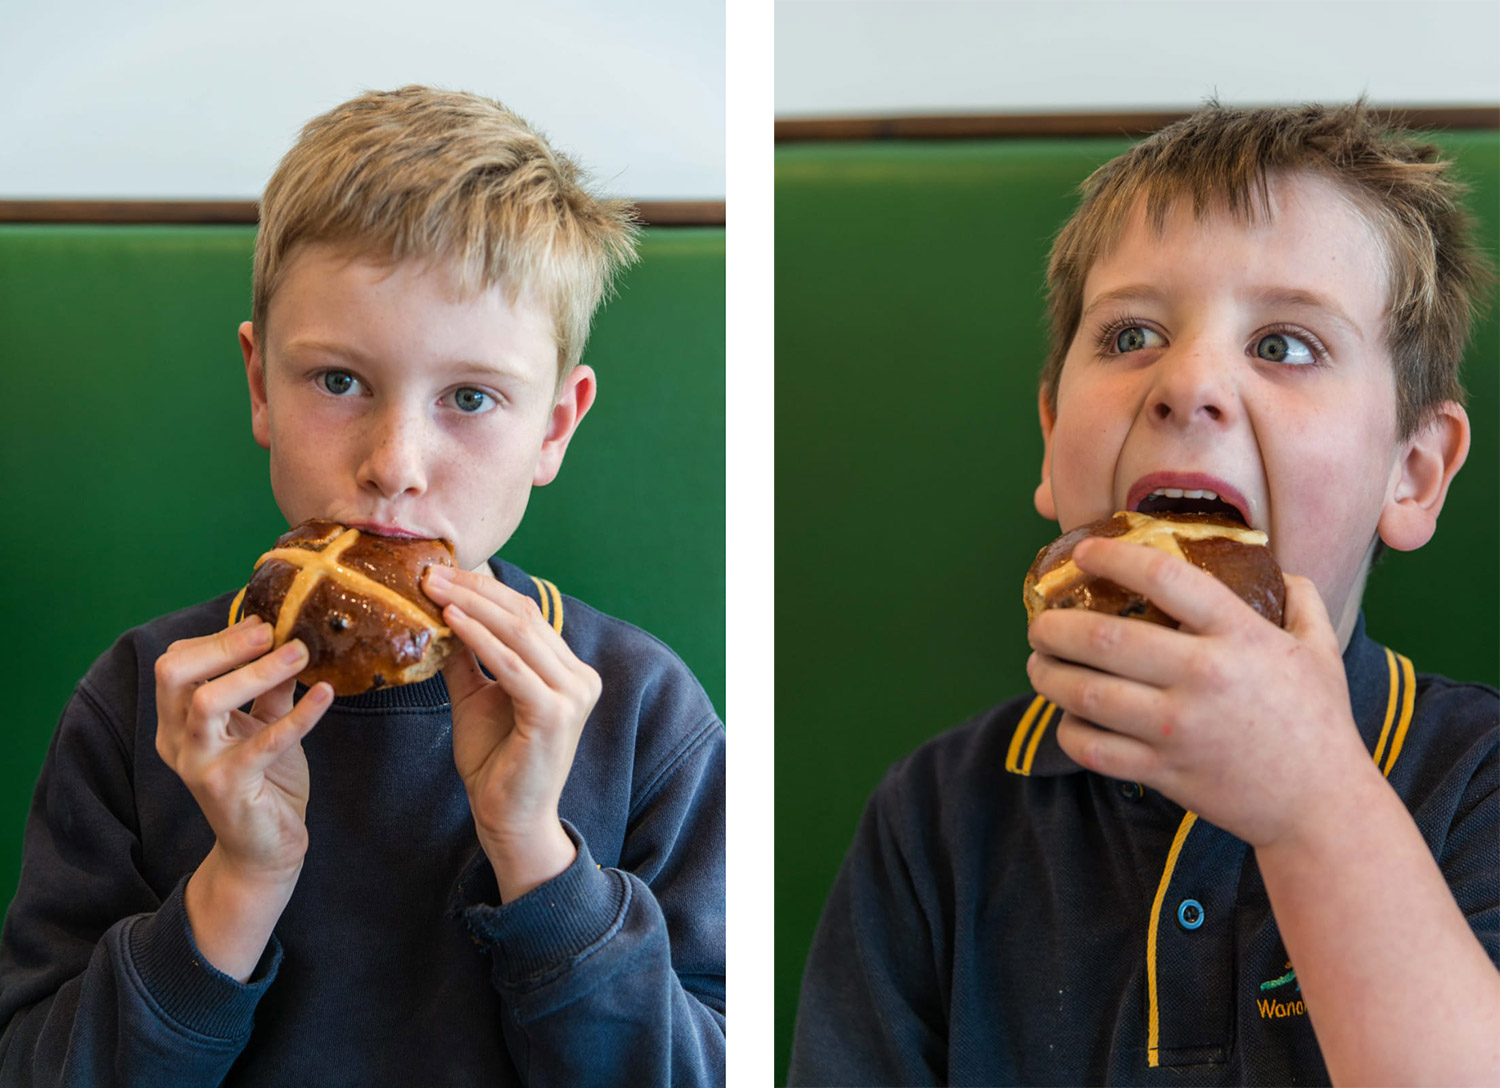 Easter Hot Cross Buns - Boys eating hot cross buns